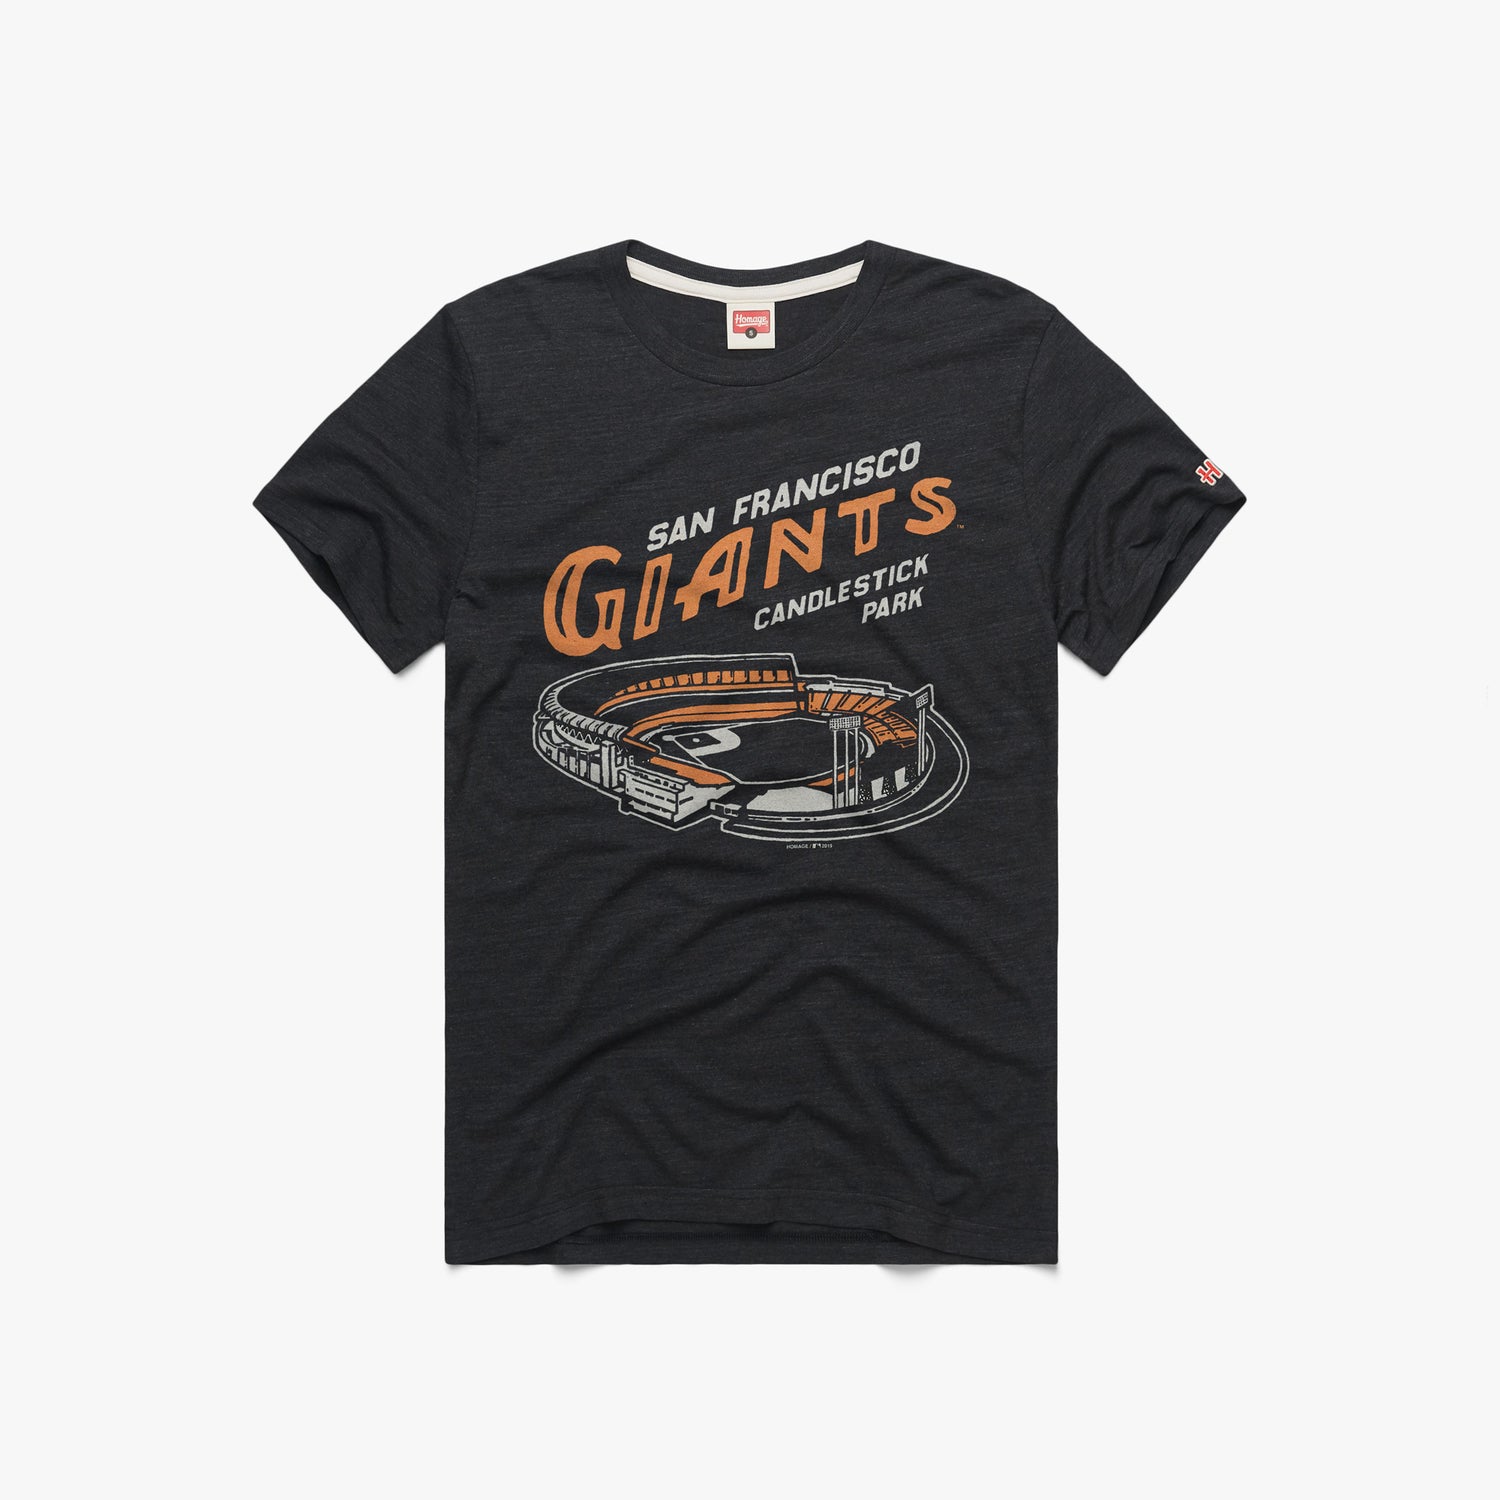 San Francisco Giants Astronaut Shirt - High-Quality Printed Brand